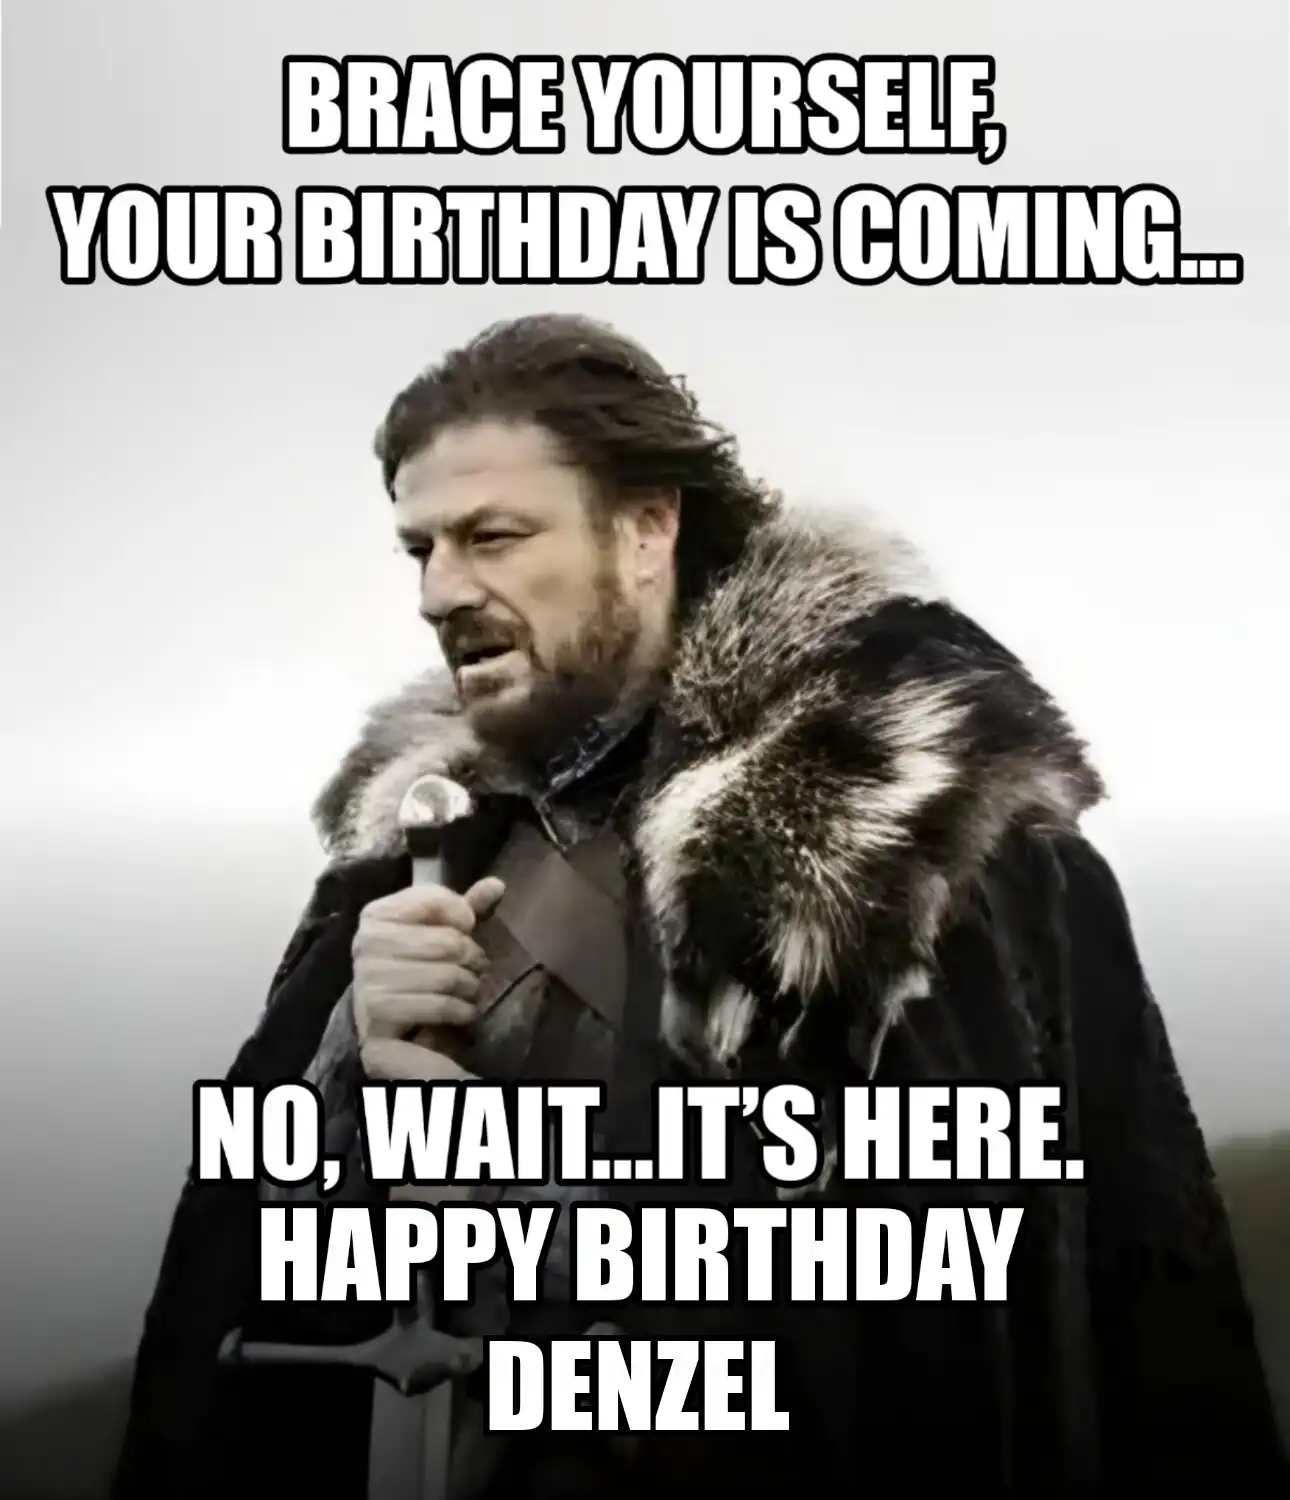 Happy Birthday Denzel Brace Yourself Your Birthday Is Coming Meme